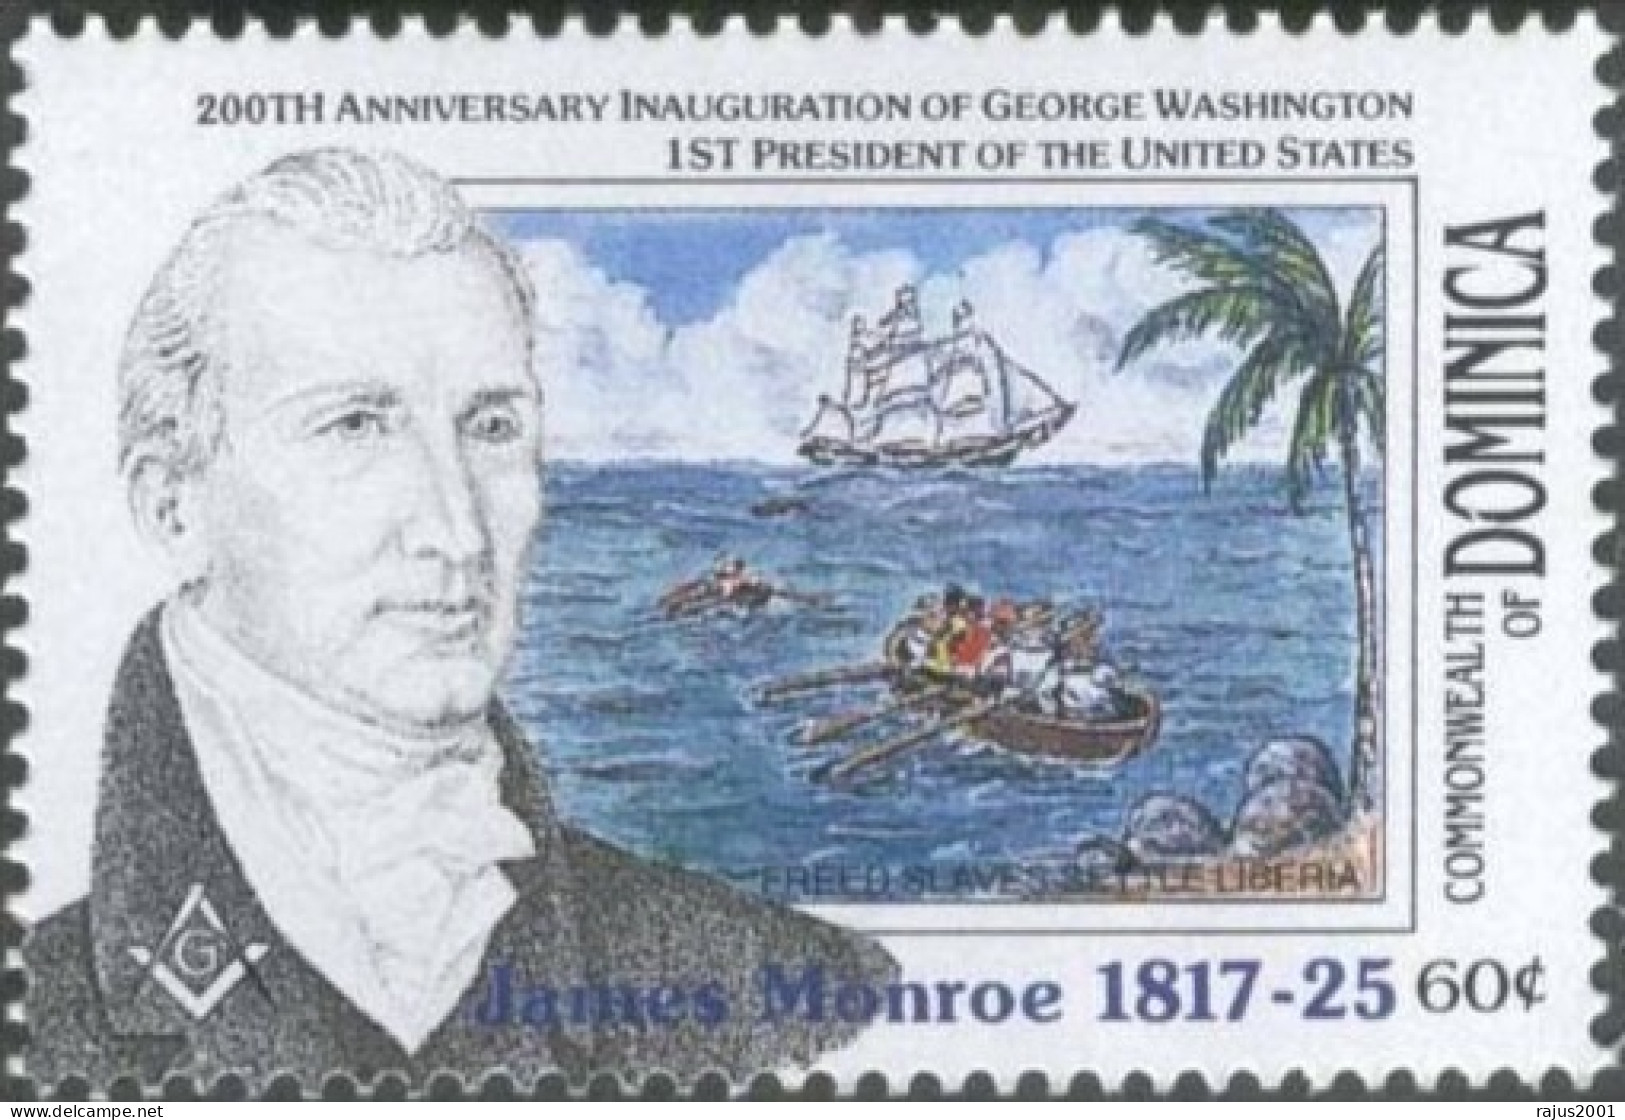 James Monroe, 5th American President, Williamsburg Lodge, Freemasonry, Freed Slaves Settlement Liberia, MNH Dominica - Freimaurerei